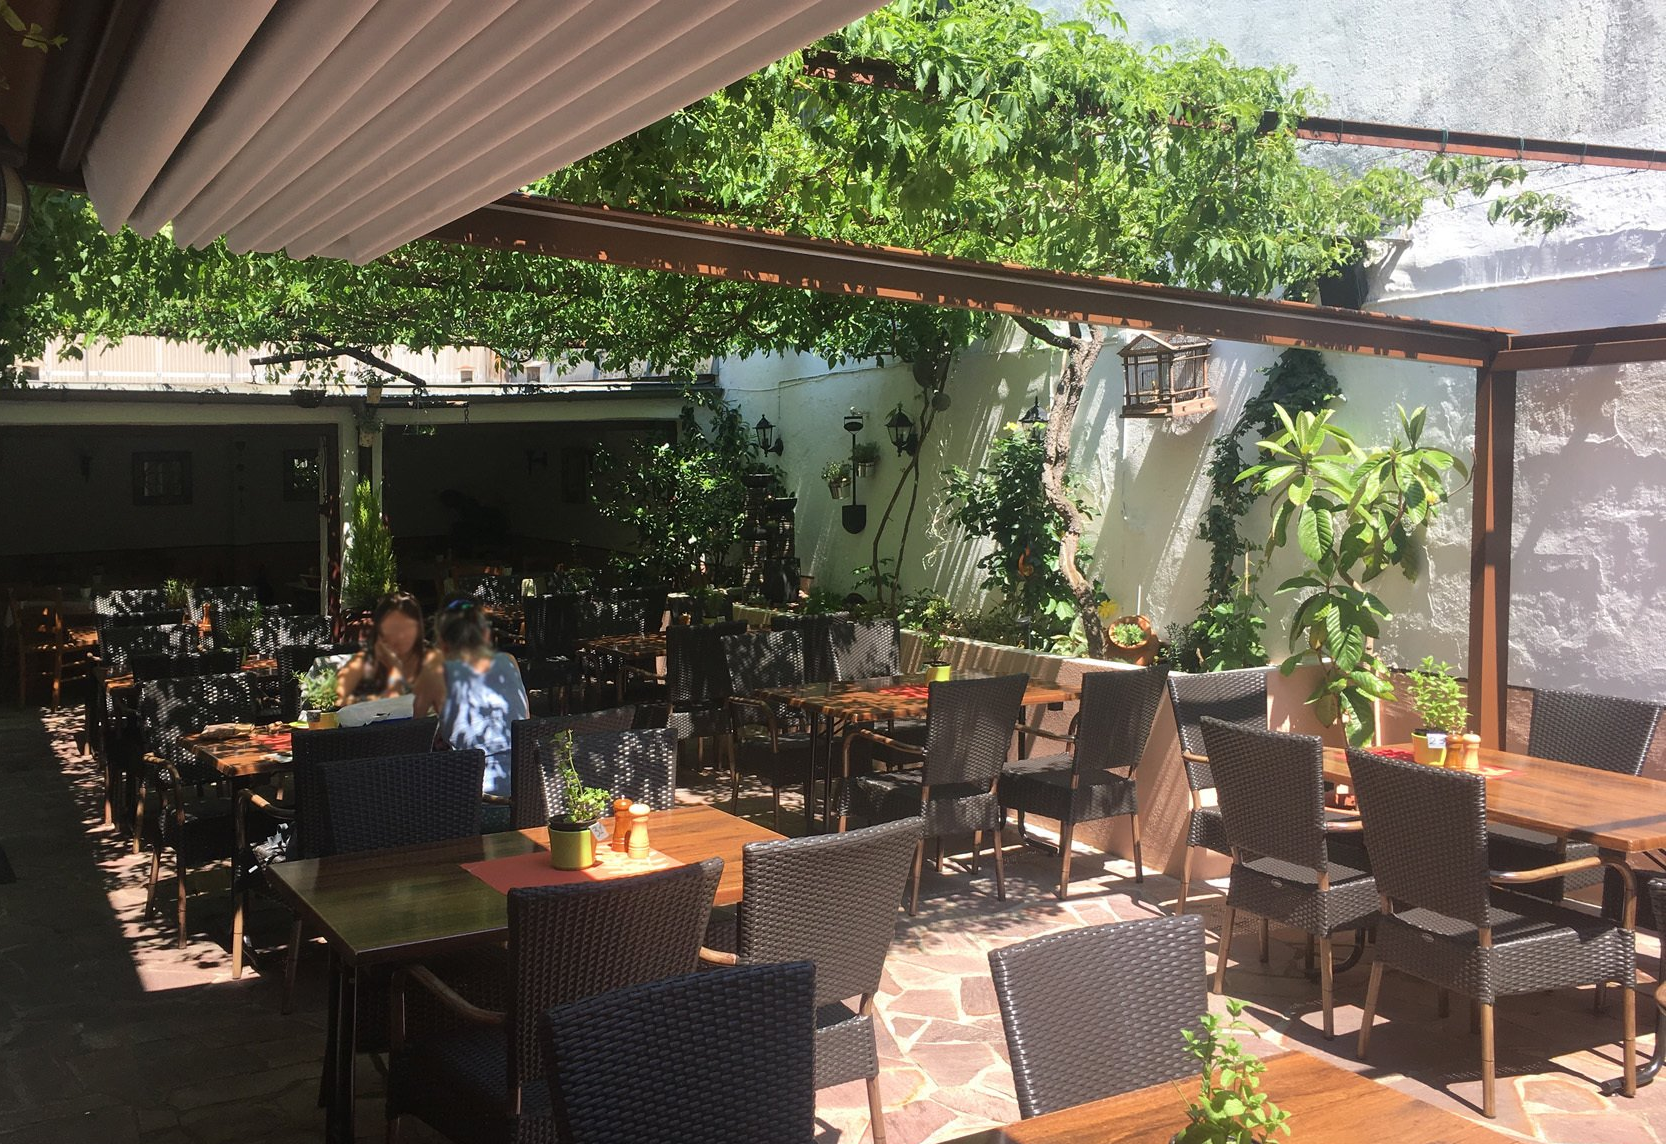 Carpaccio beergarden - Italian restaurant with closable pergola roof  in case of too strong sun or rain